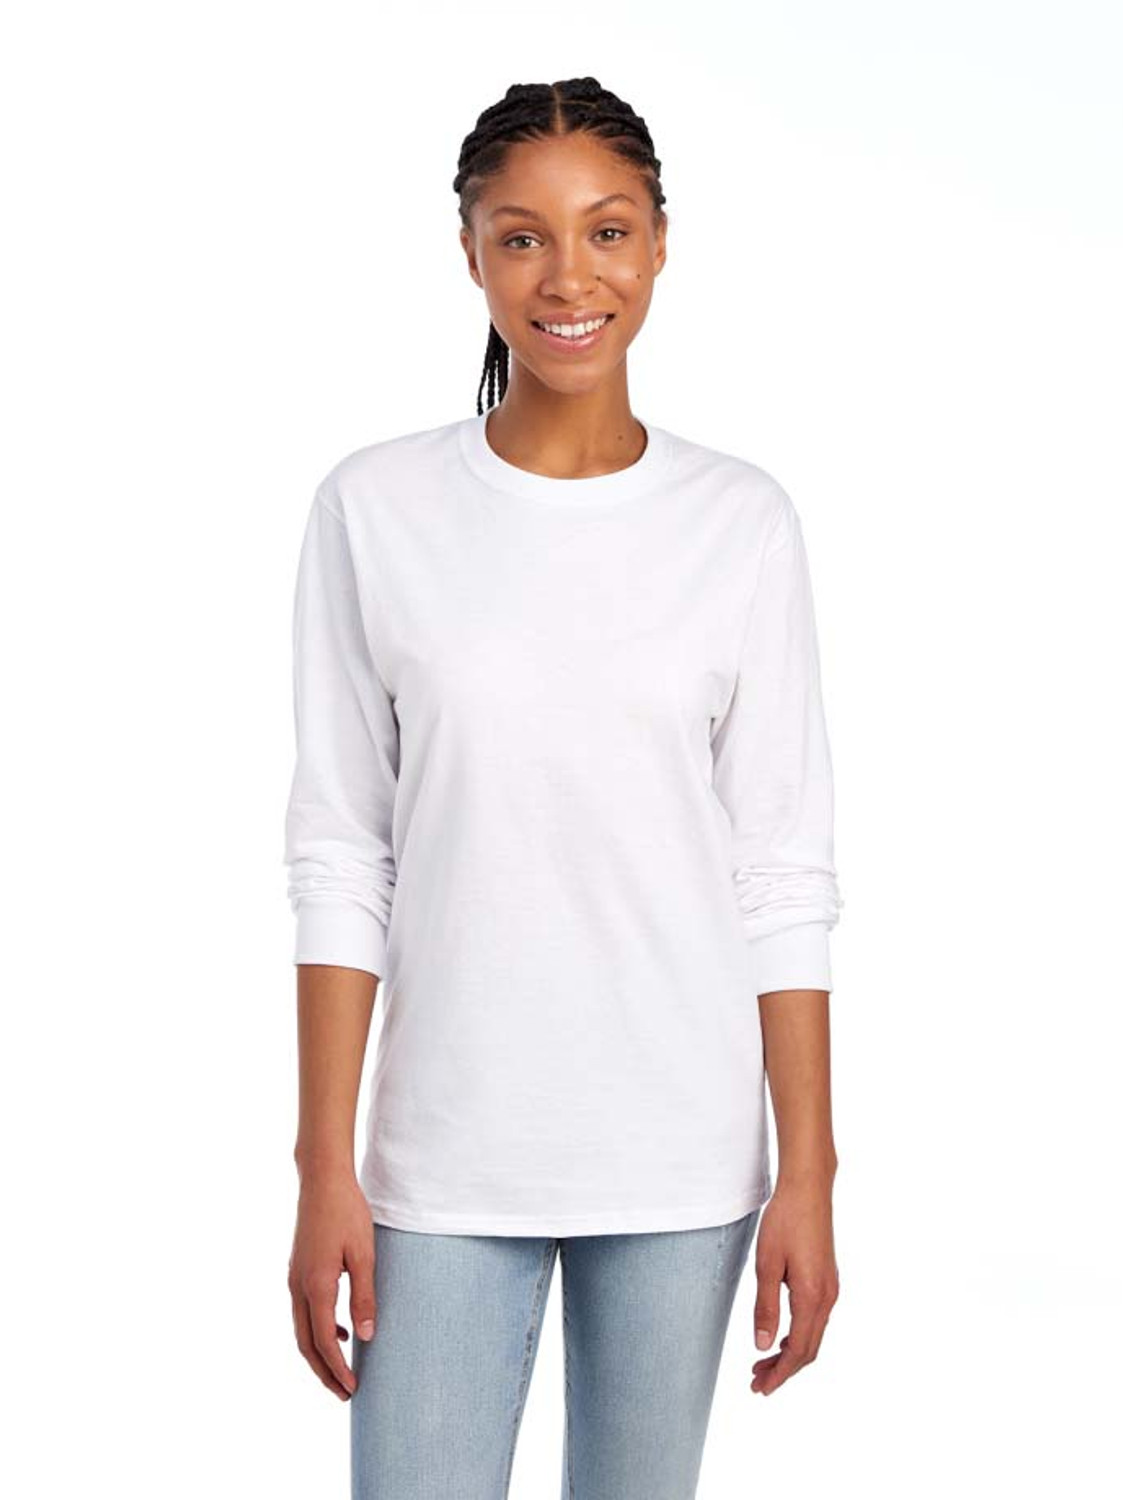 Stylish Full Sleeve Cotton Printed Top Tshirt –